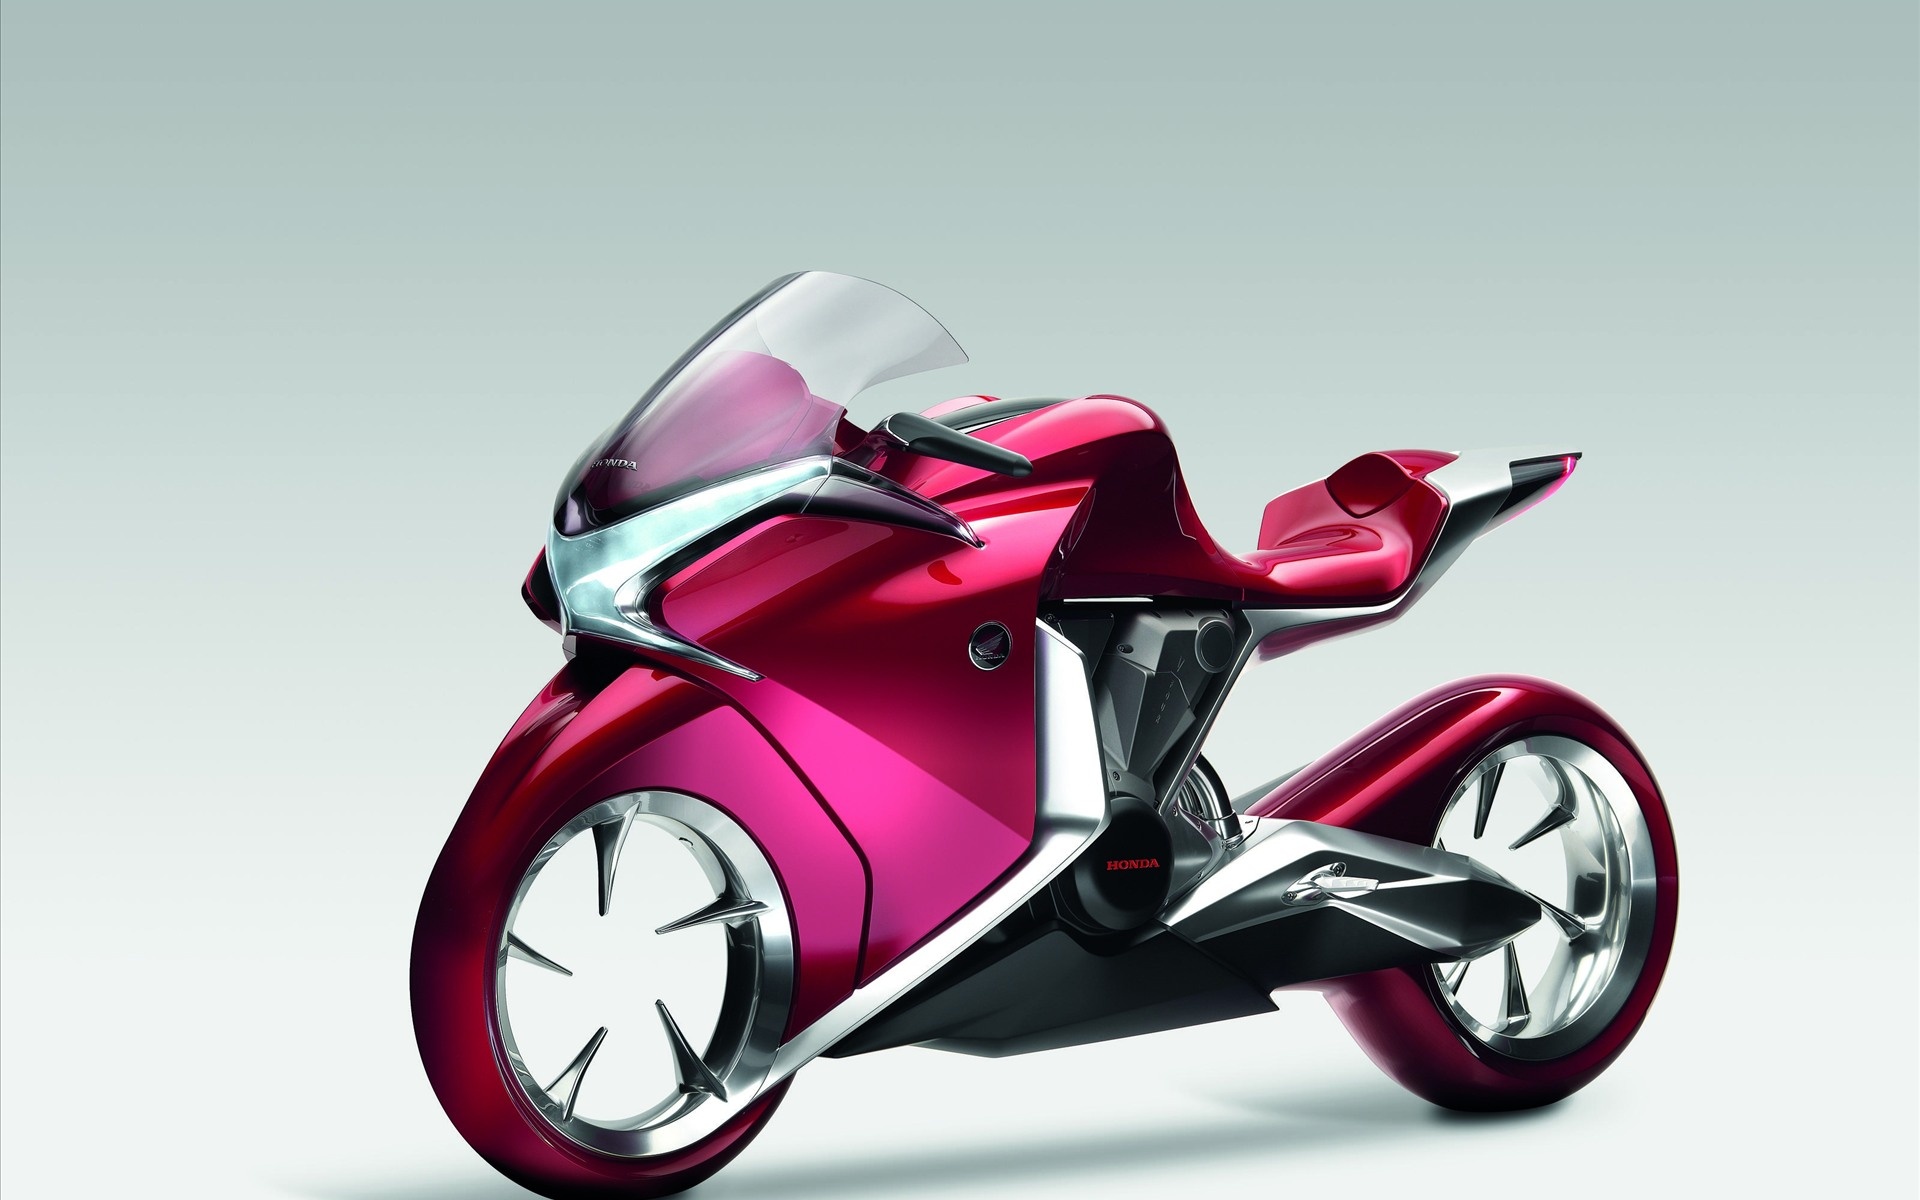 Honda V4 Concept Widescreen Bike Wallpapers In Jpg Format For Free